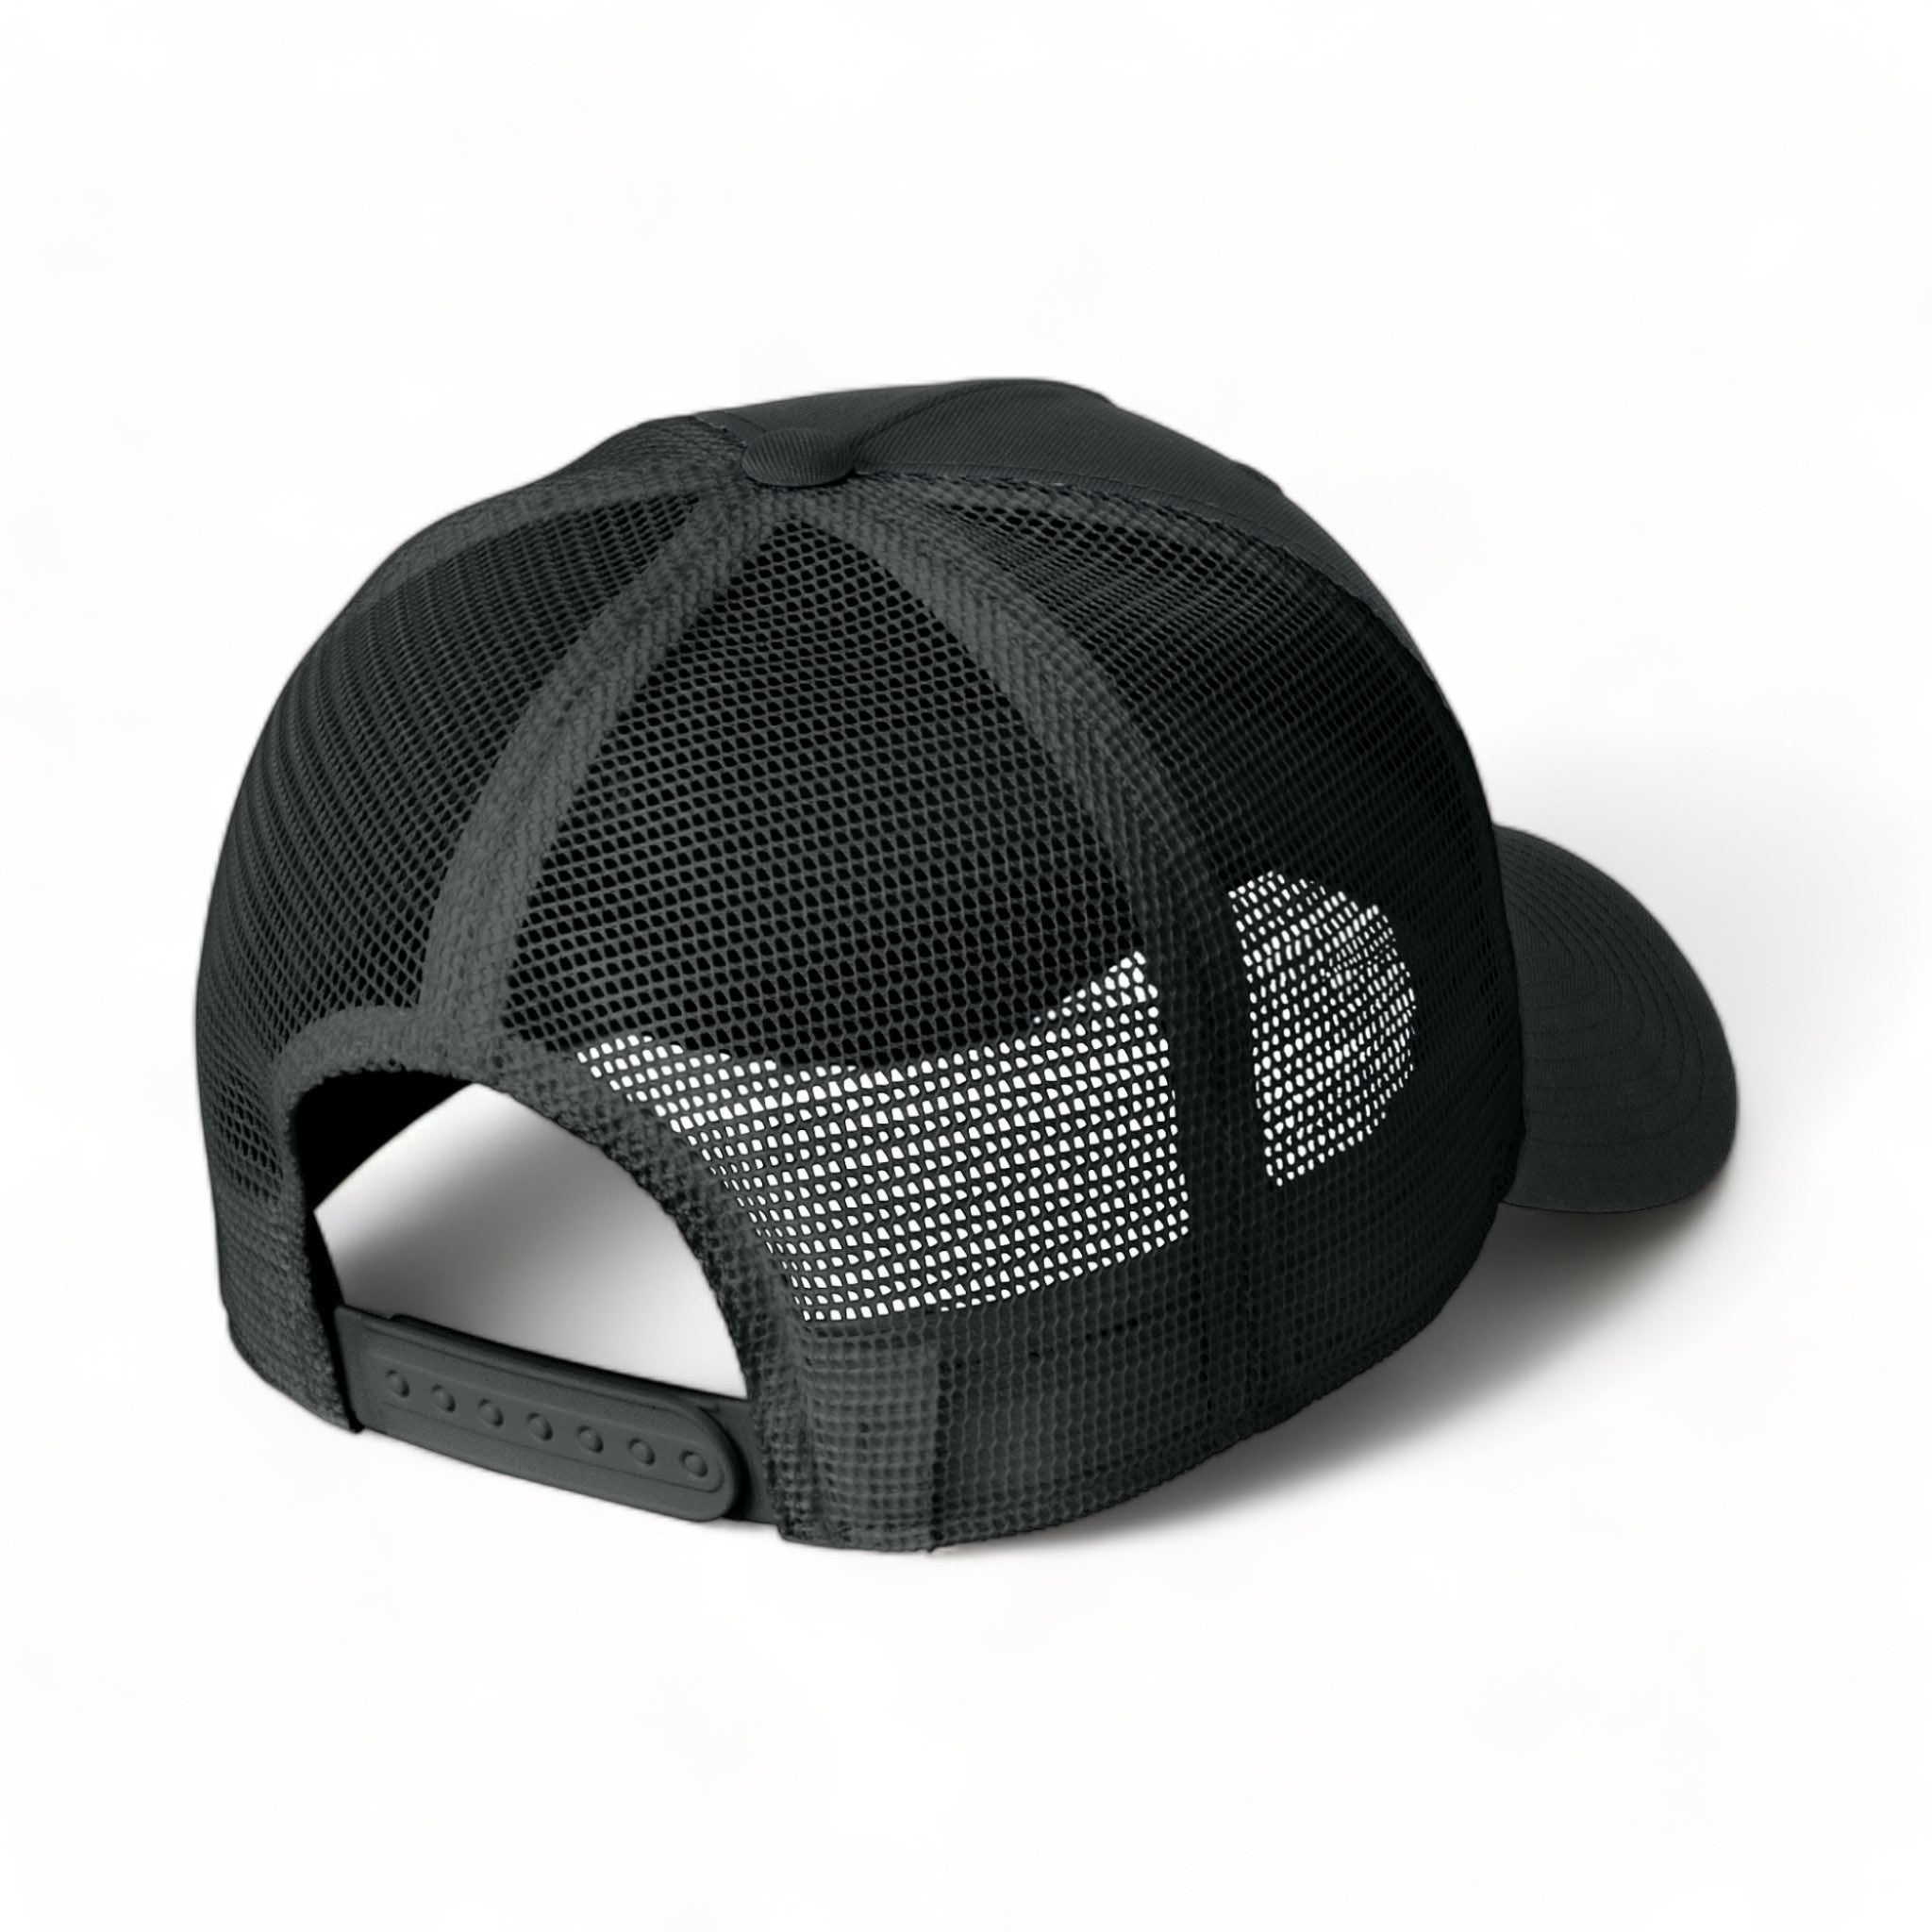 Back view of Nike NKFN9893 custom hat in black and black